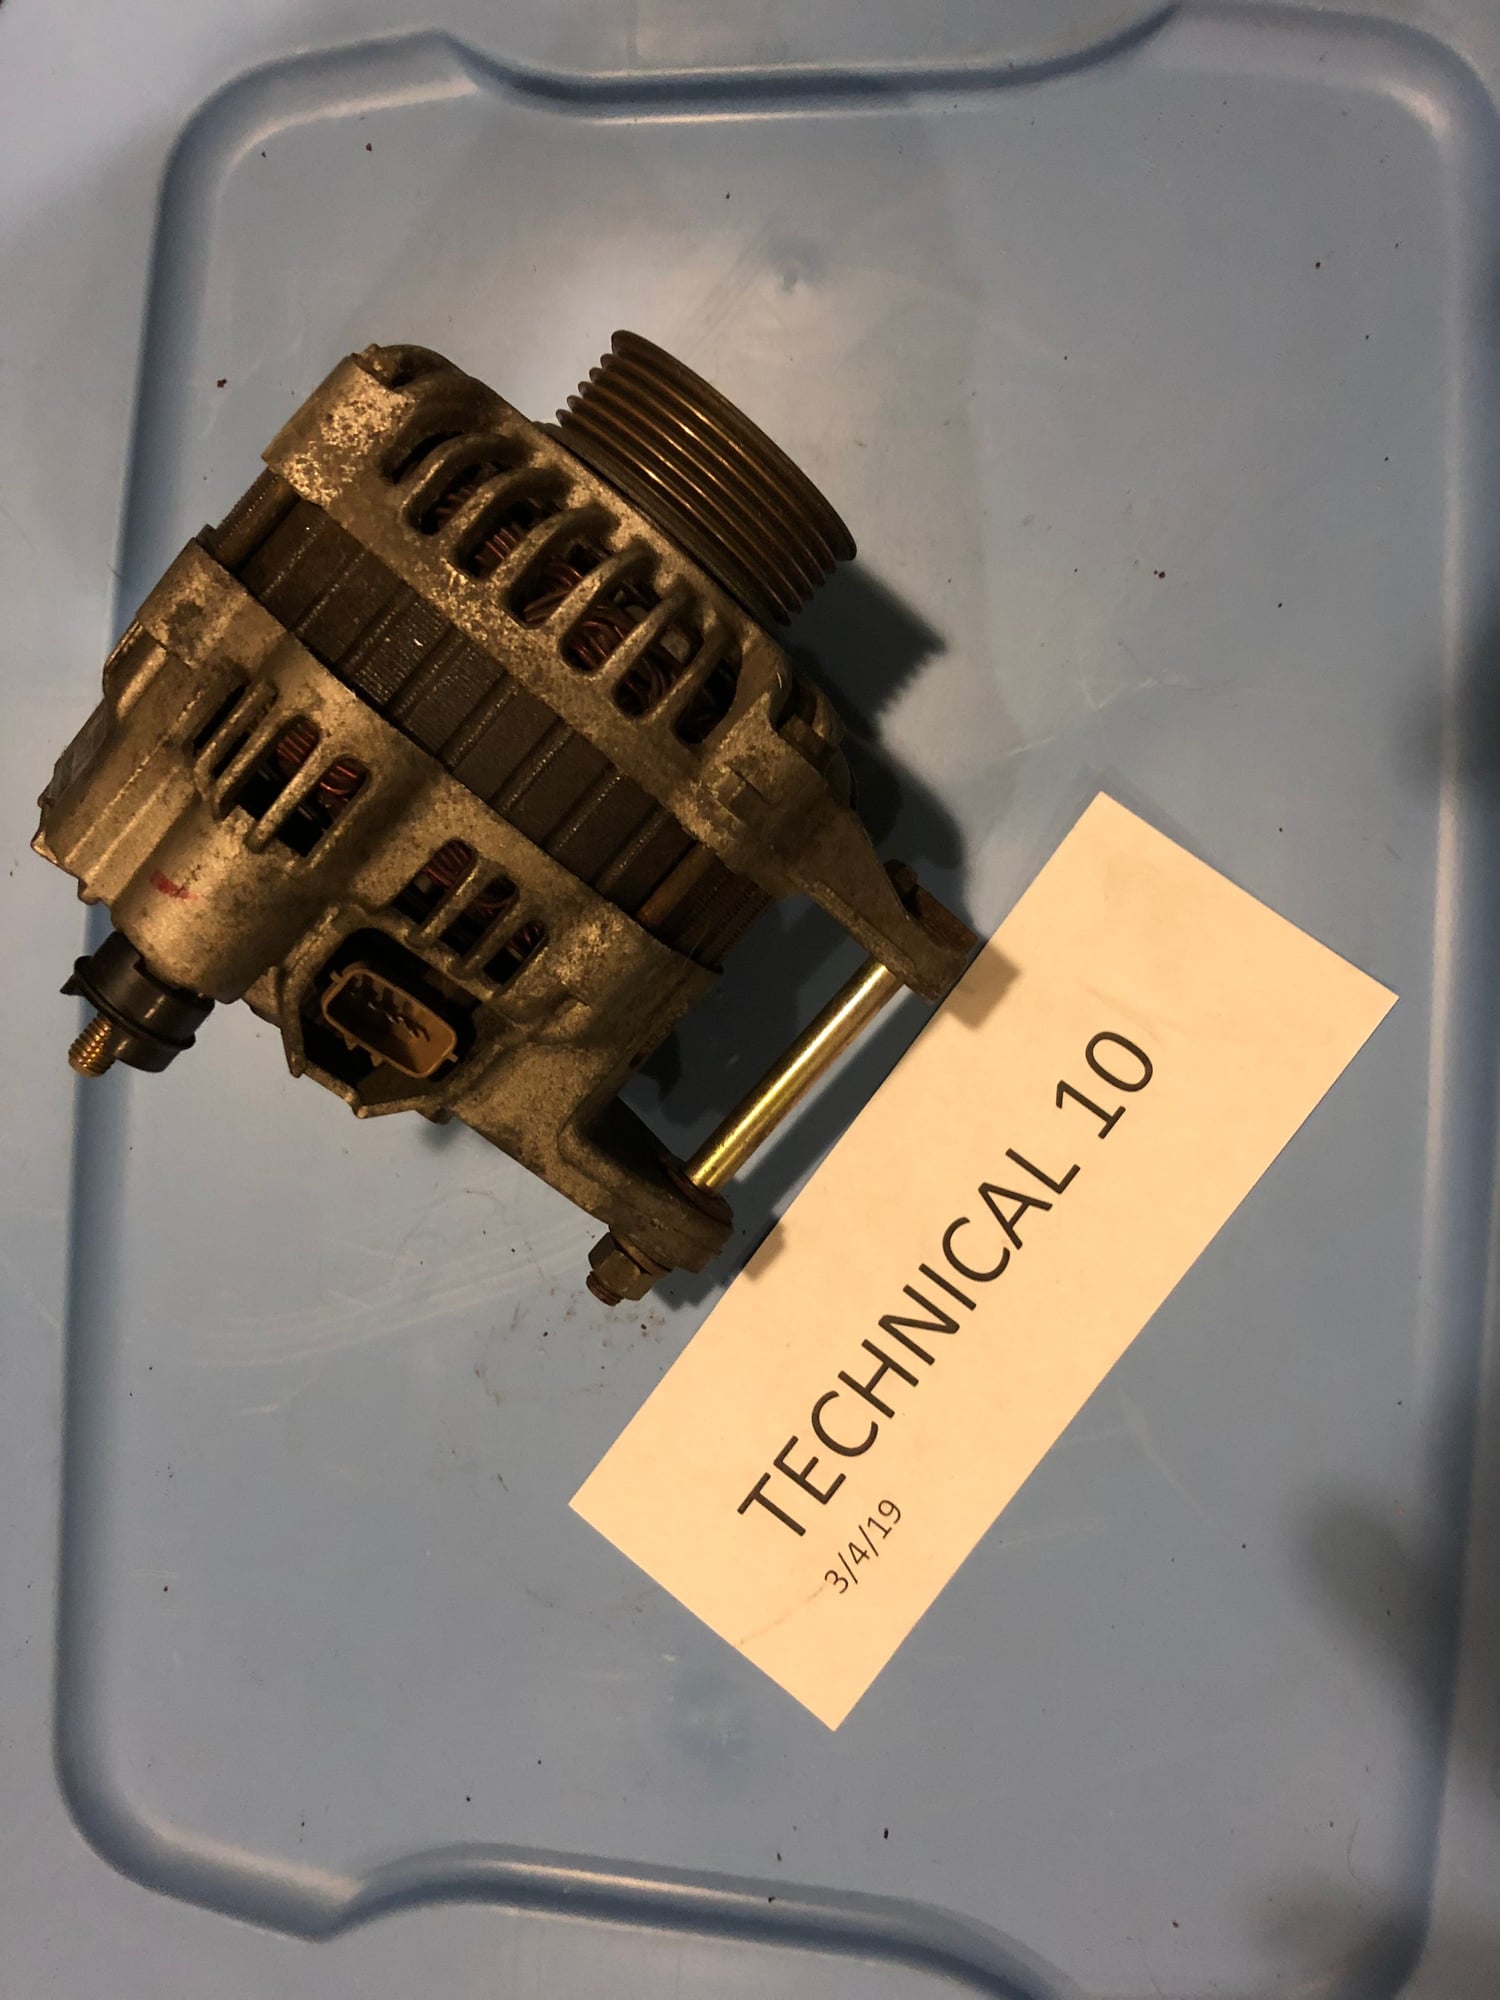 Engine - Electrical - Alternator for Evo 8/9 - Used - 2003 to 2006 Mitsubishi Lancer Evolution - Gambrills, MD 21054, United States